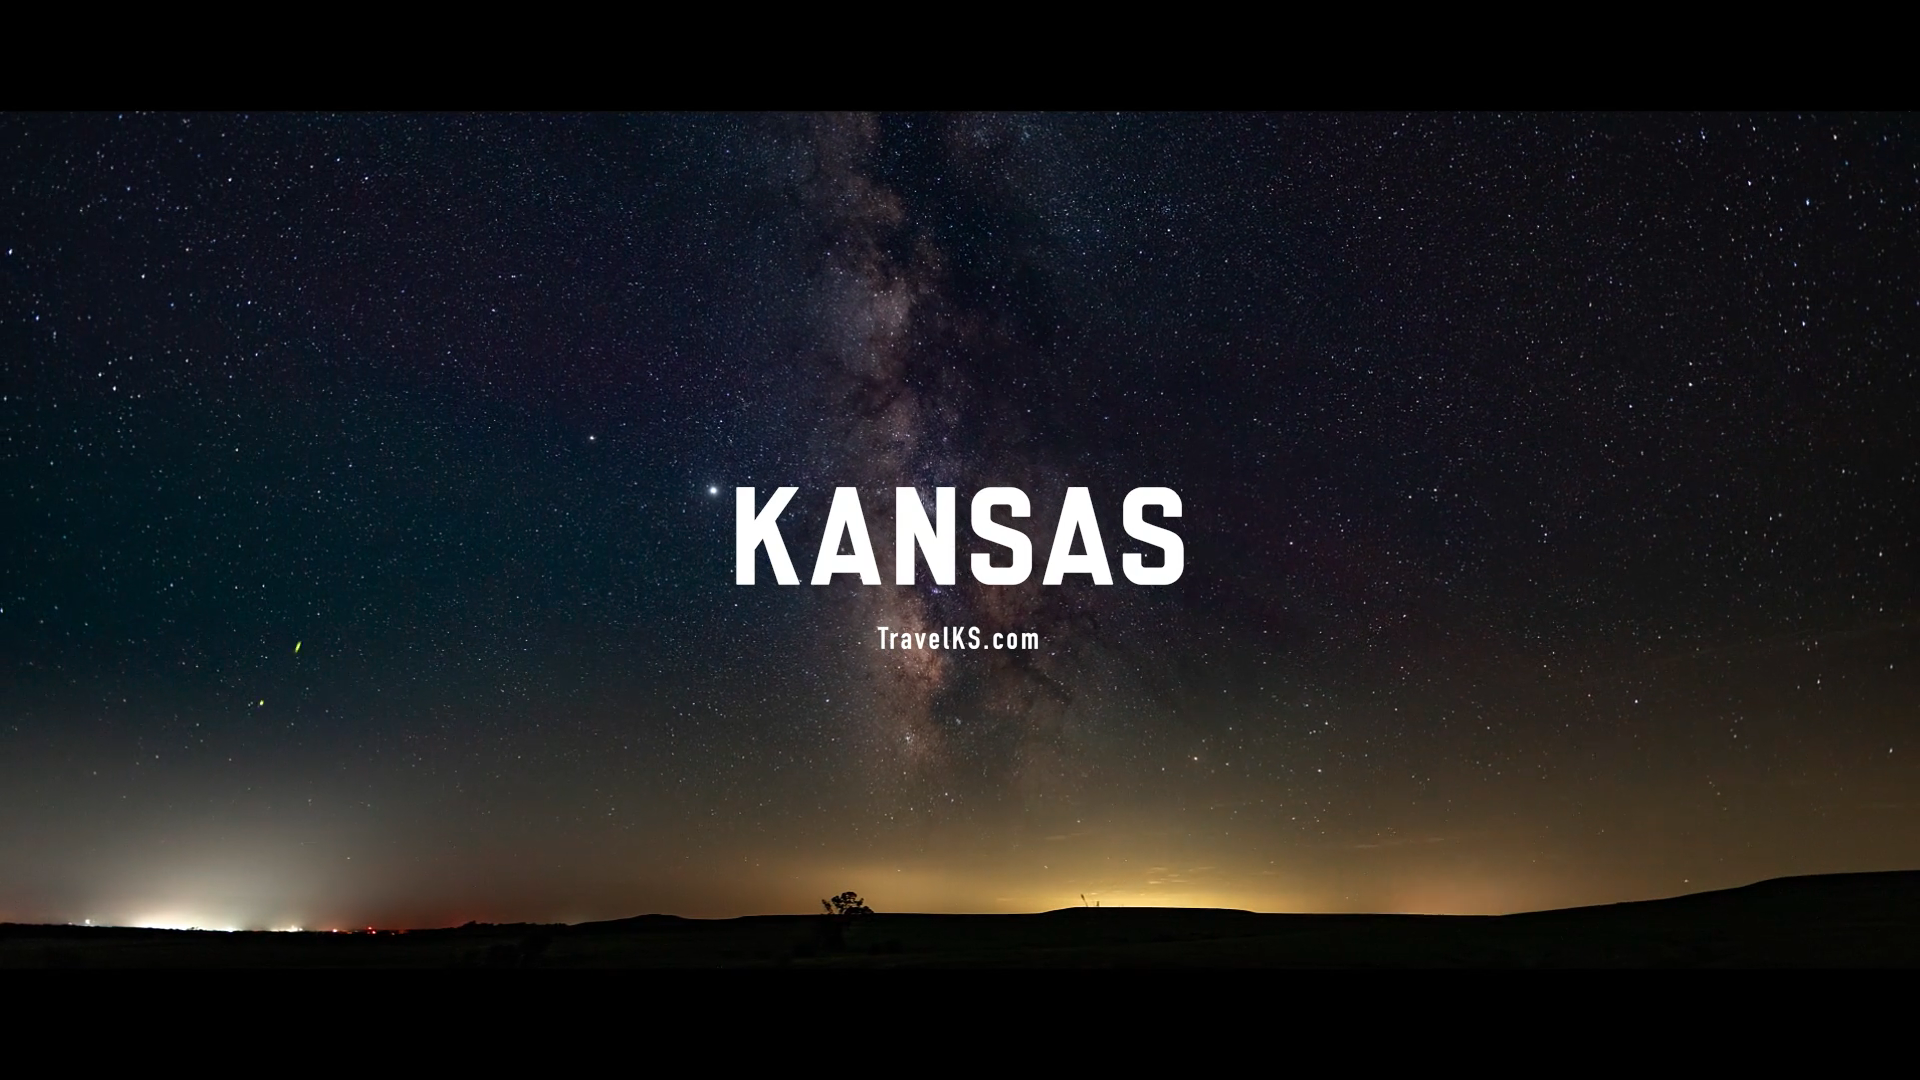 Kansas: To the Stars